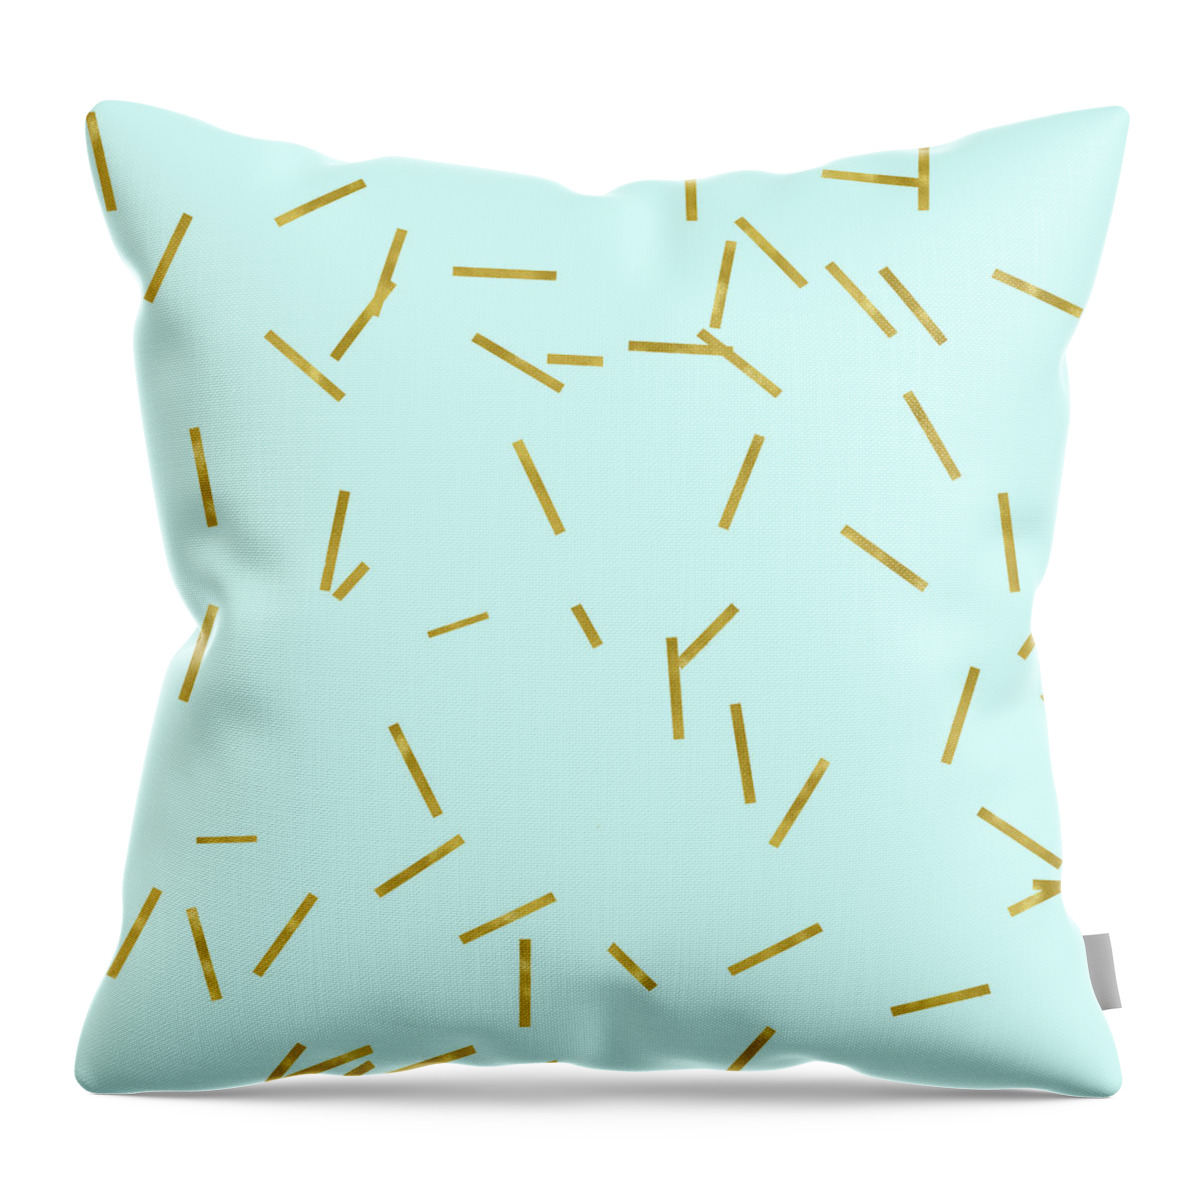 Stix Throw Pillow featuring the digital art Glitter confetti on aqua gold pick up sticks pattern by Tina Lavoie